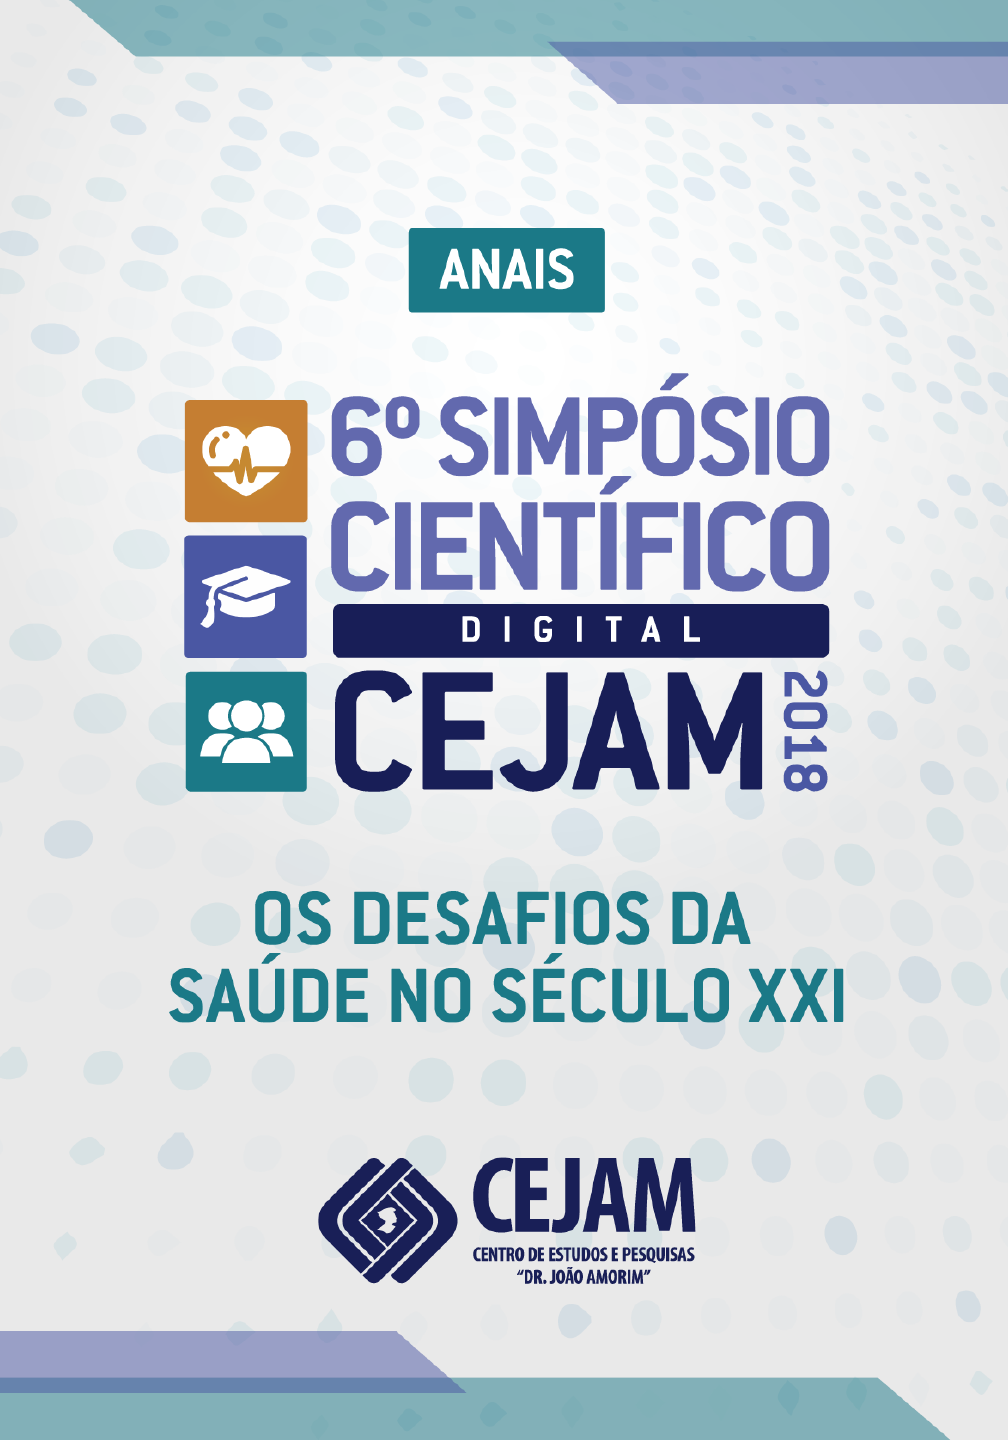                     Visualizar v. 6 (2018): 6º Simpósio Científico Internacional CEJAM
                